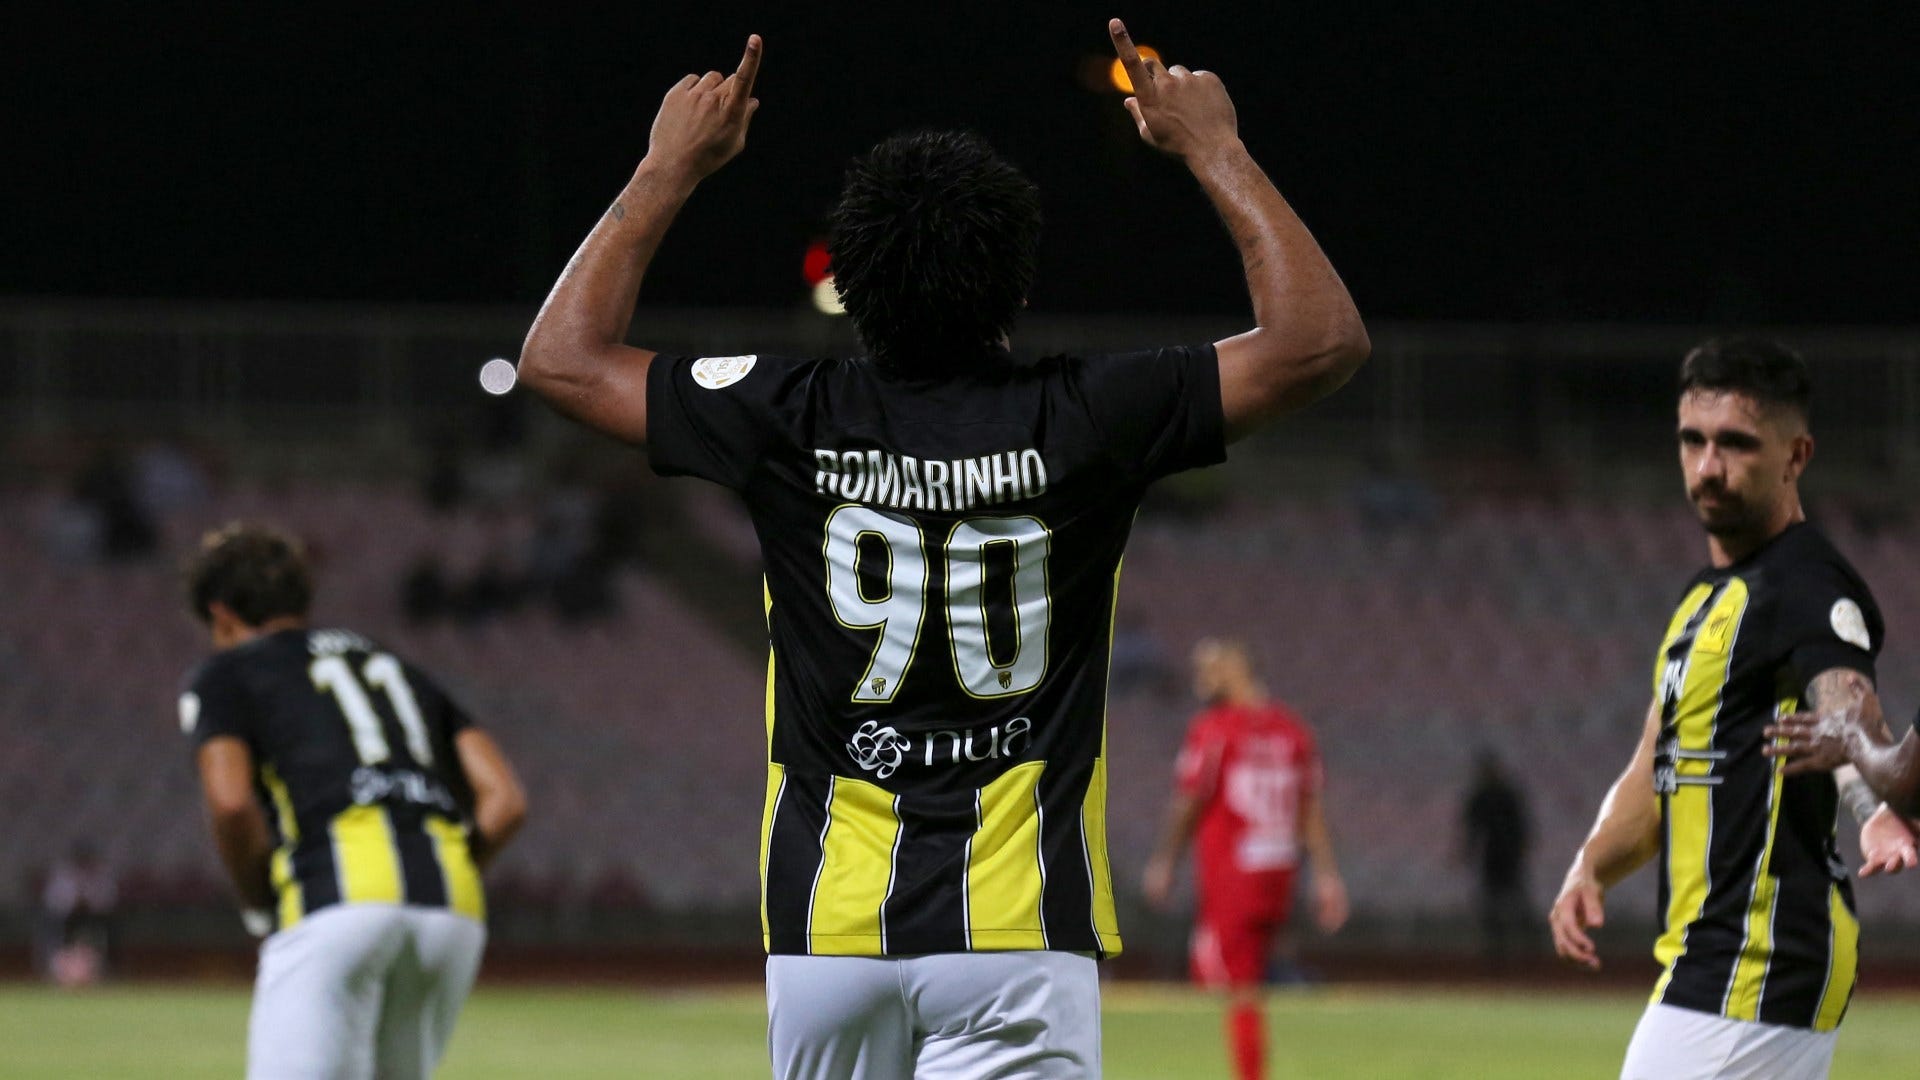 Palpite Al-Ittihad x Al-Khaleej - Campeonato Saudita - 30/11